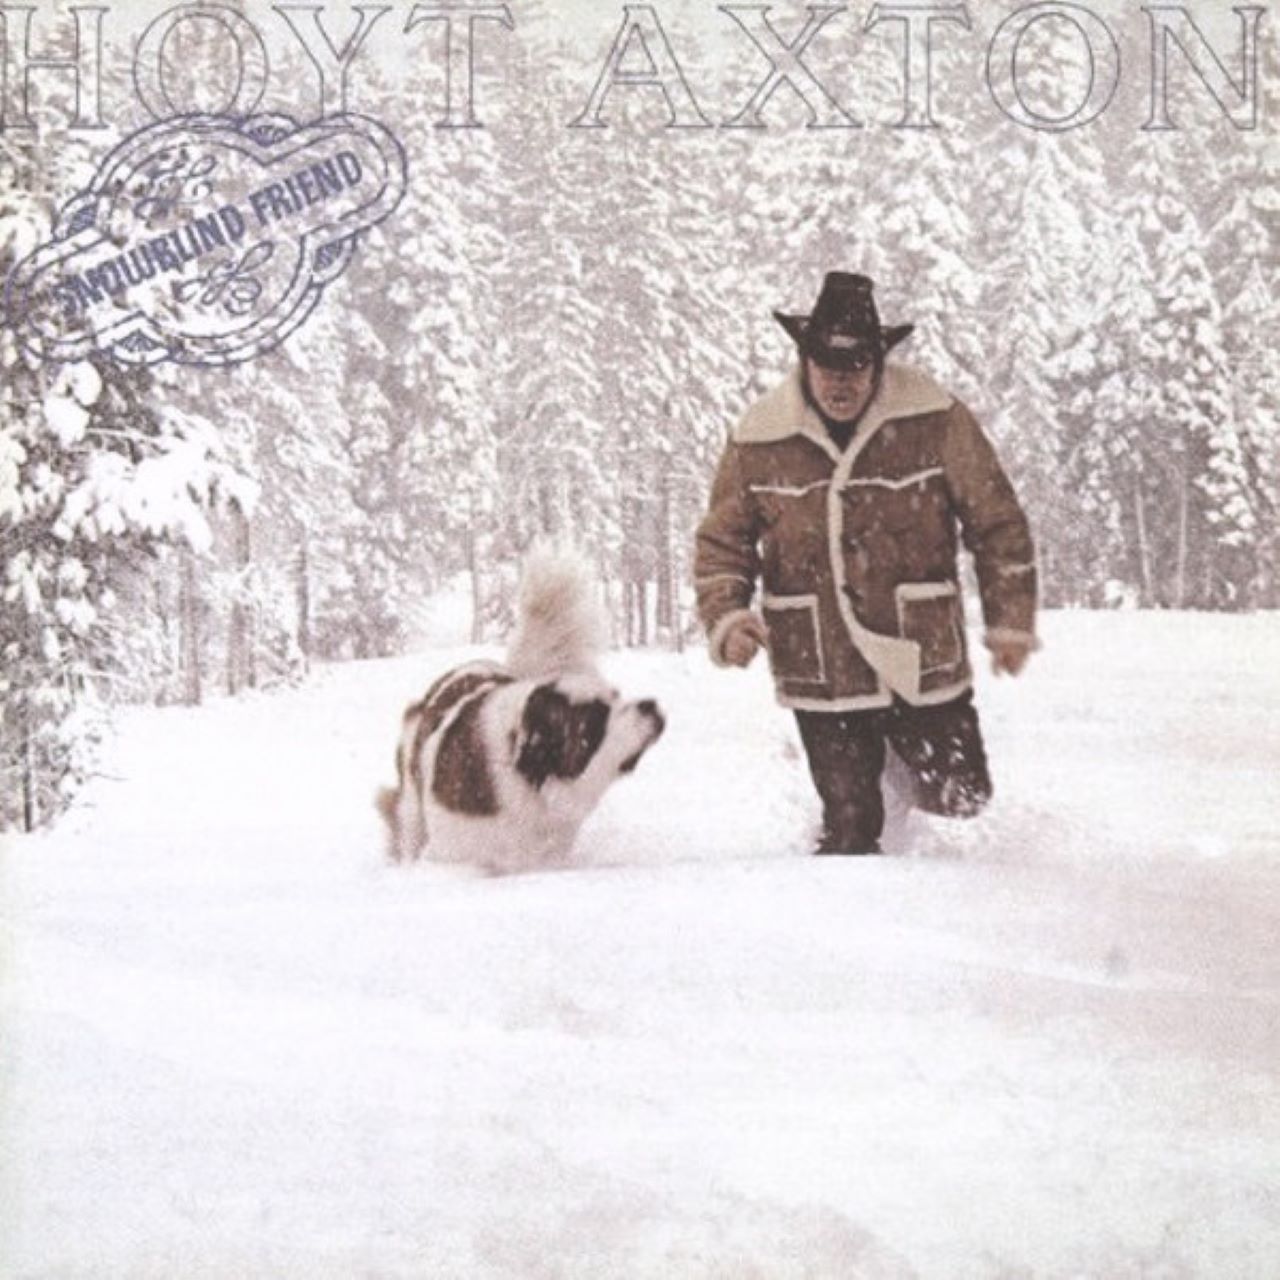 Hoyt Axton - Snowblind Friend cover album